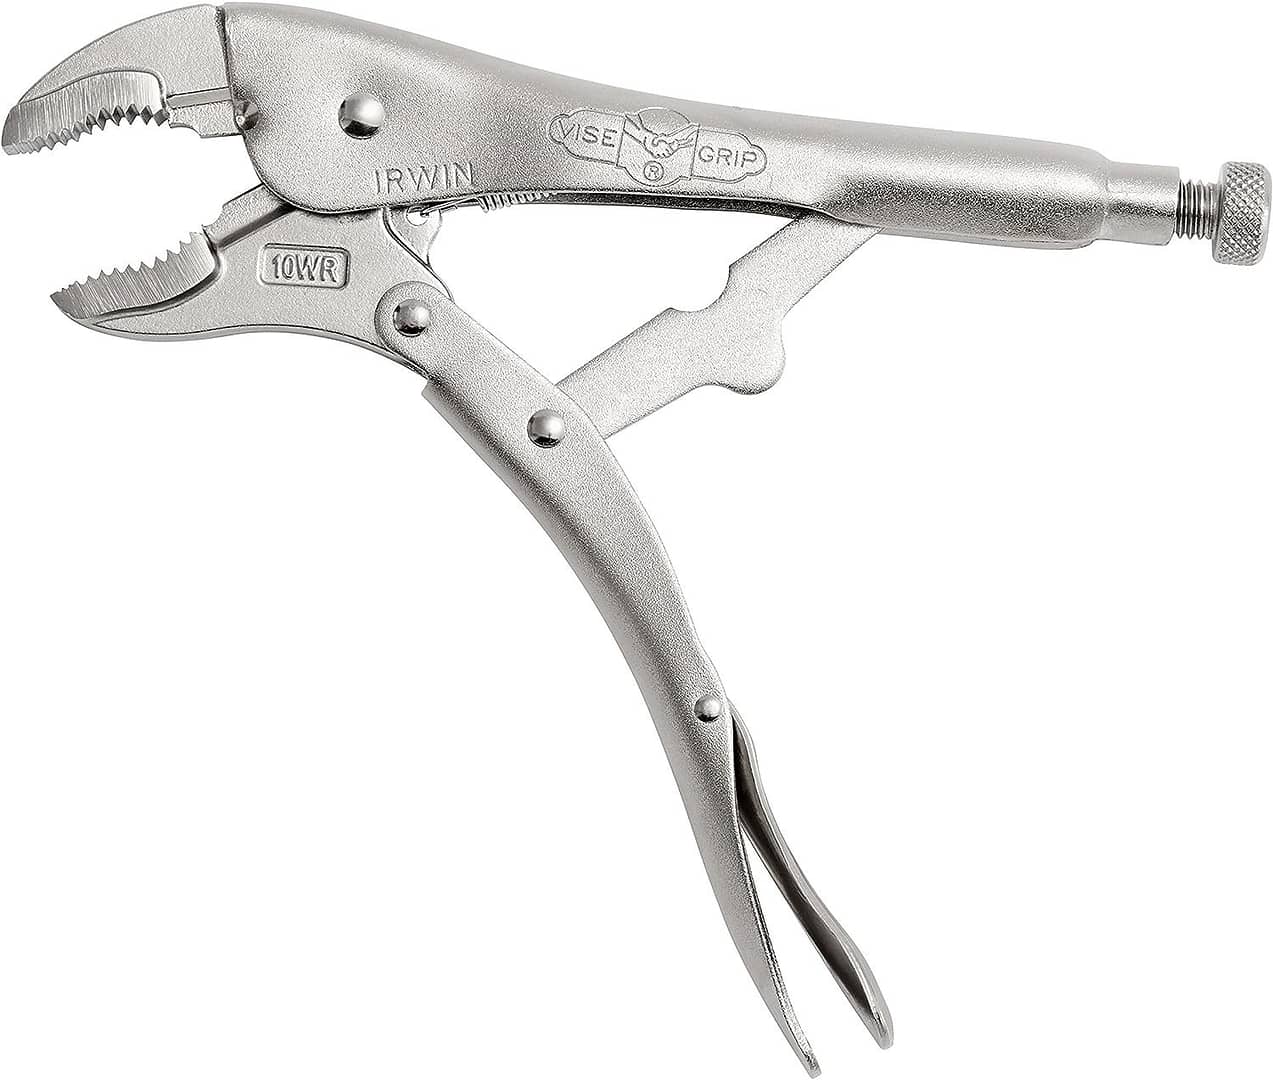 irwin vise grip original locking pliers review